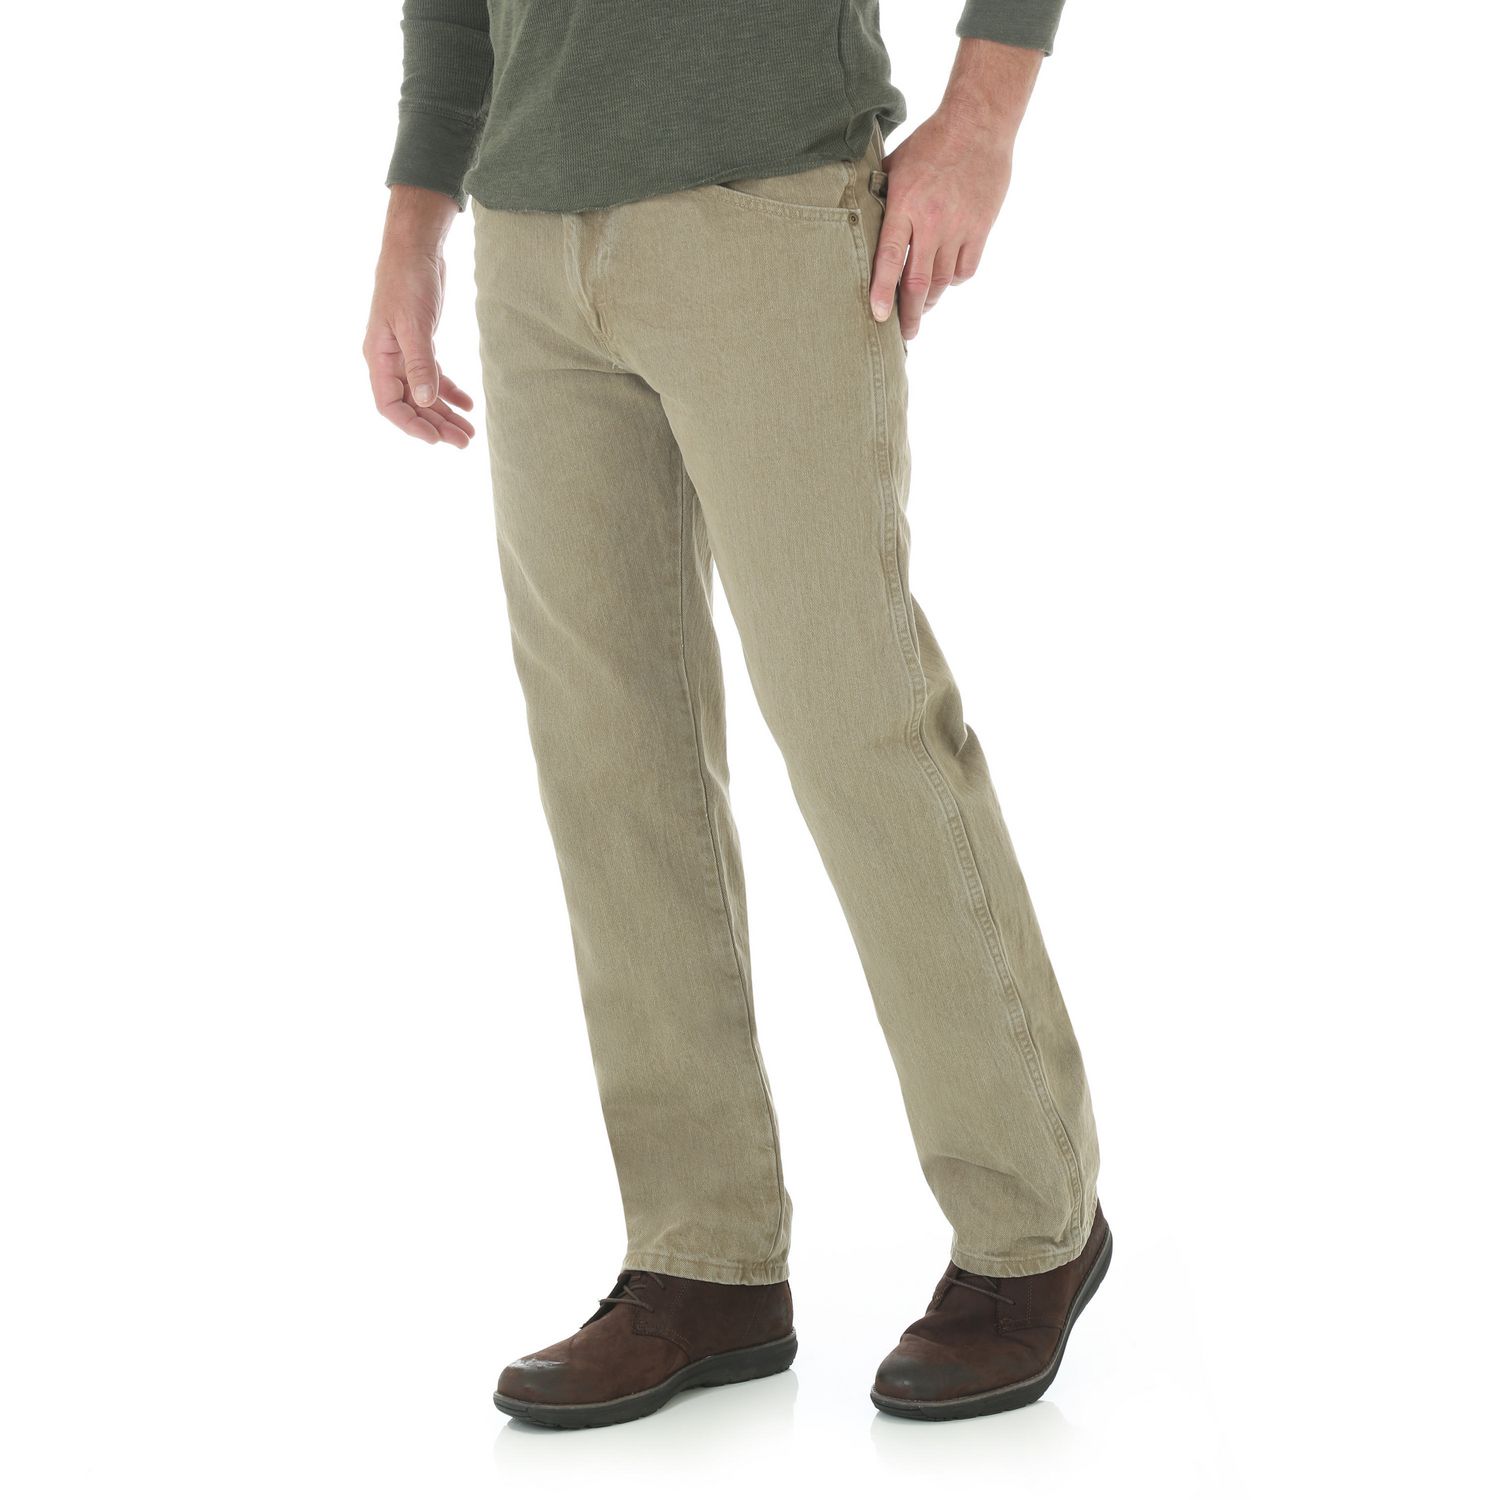 Wrangler Men's Five Star Premium Regular Fit Jeans | Walmart Canada